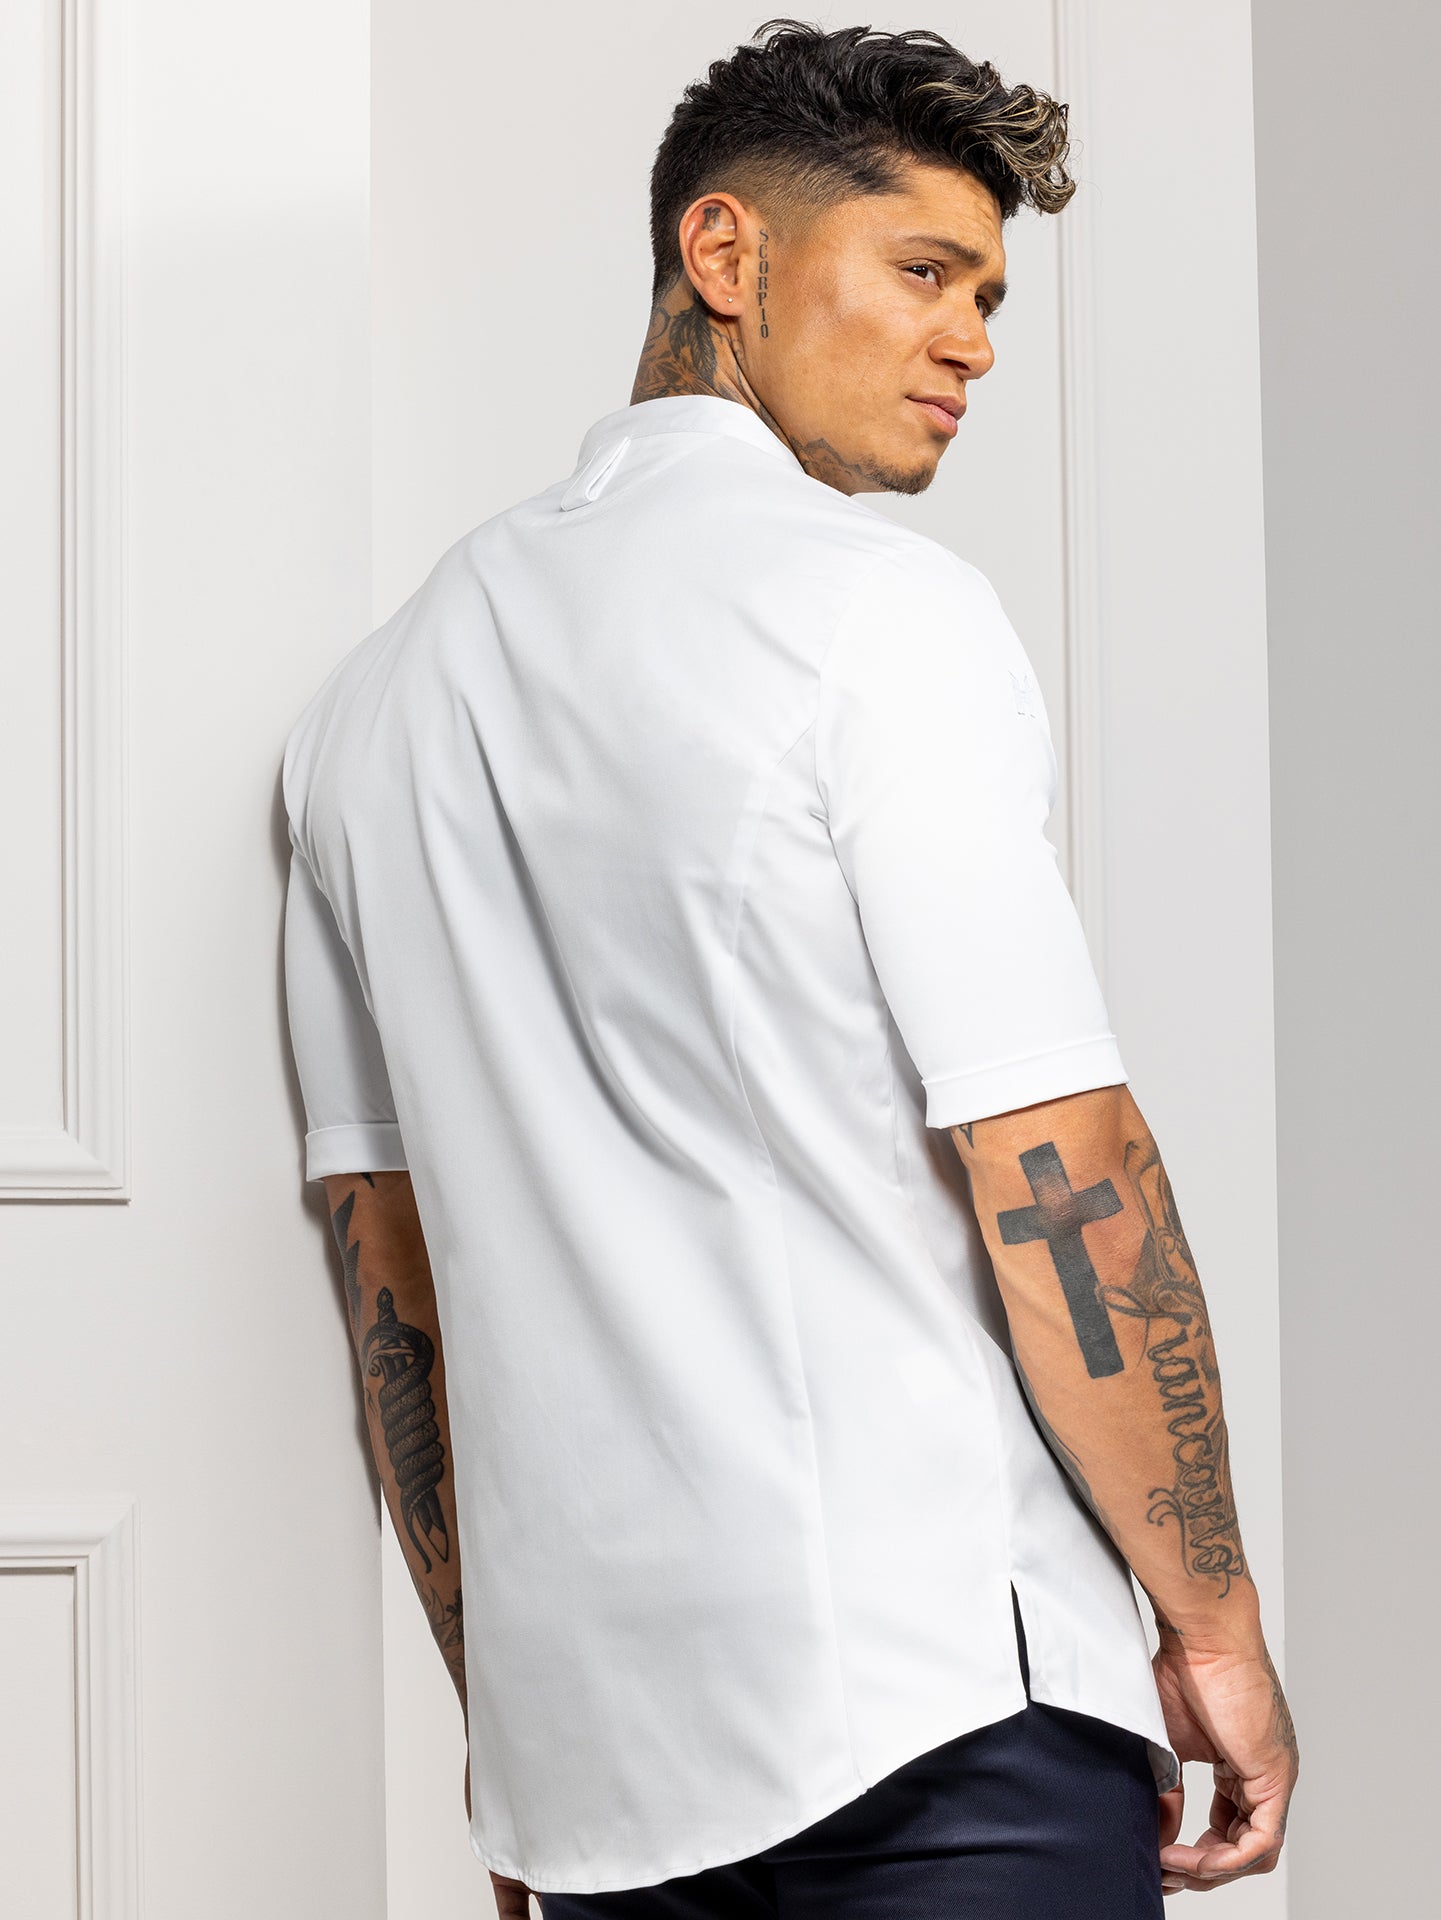 Chef Jacket Tygo White by Le Nouveau Chef -  ChefsCotton